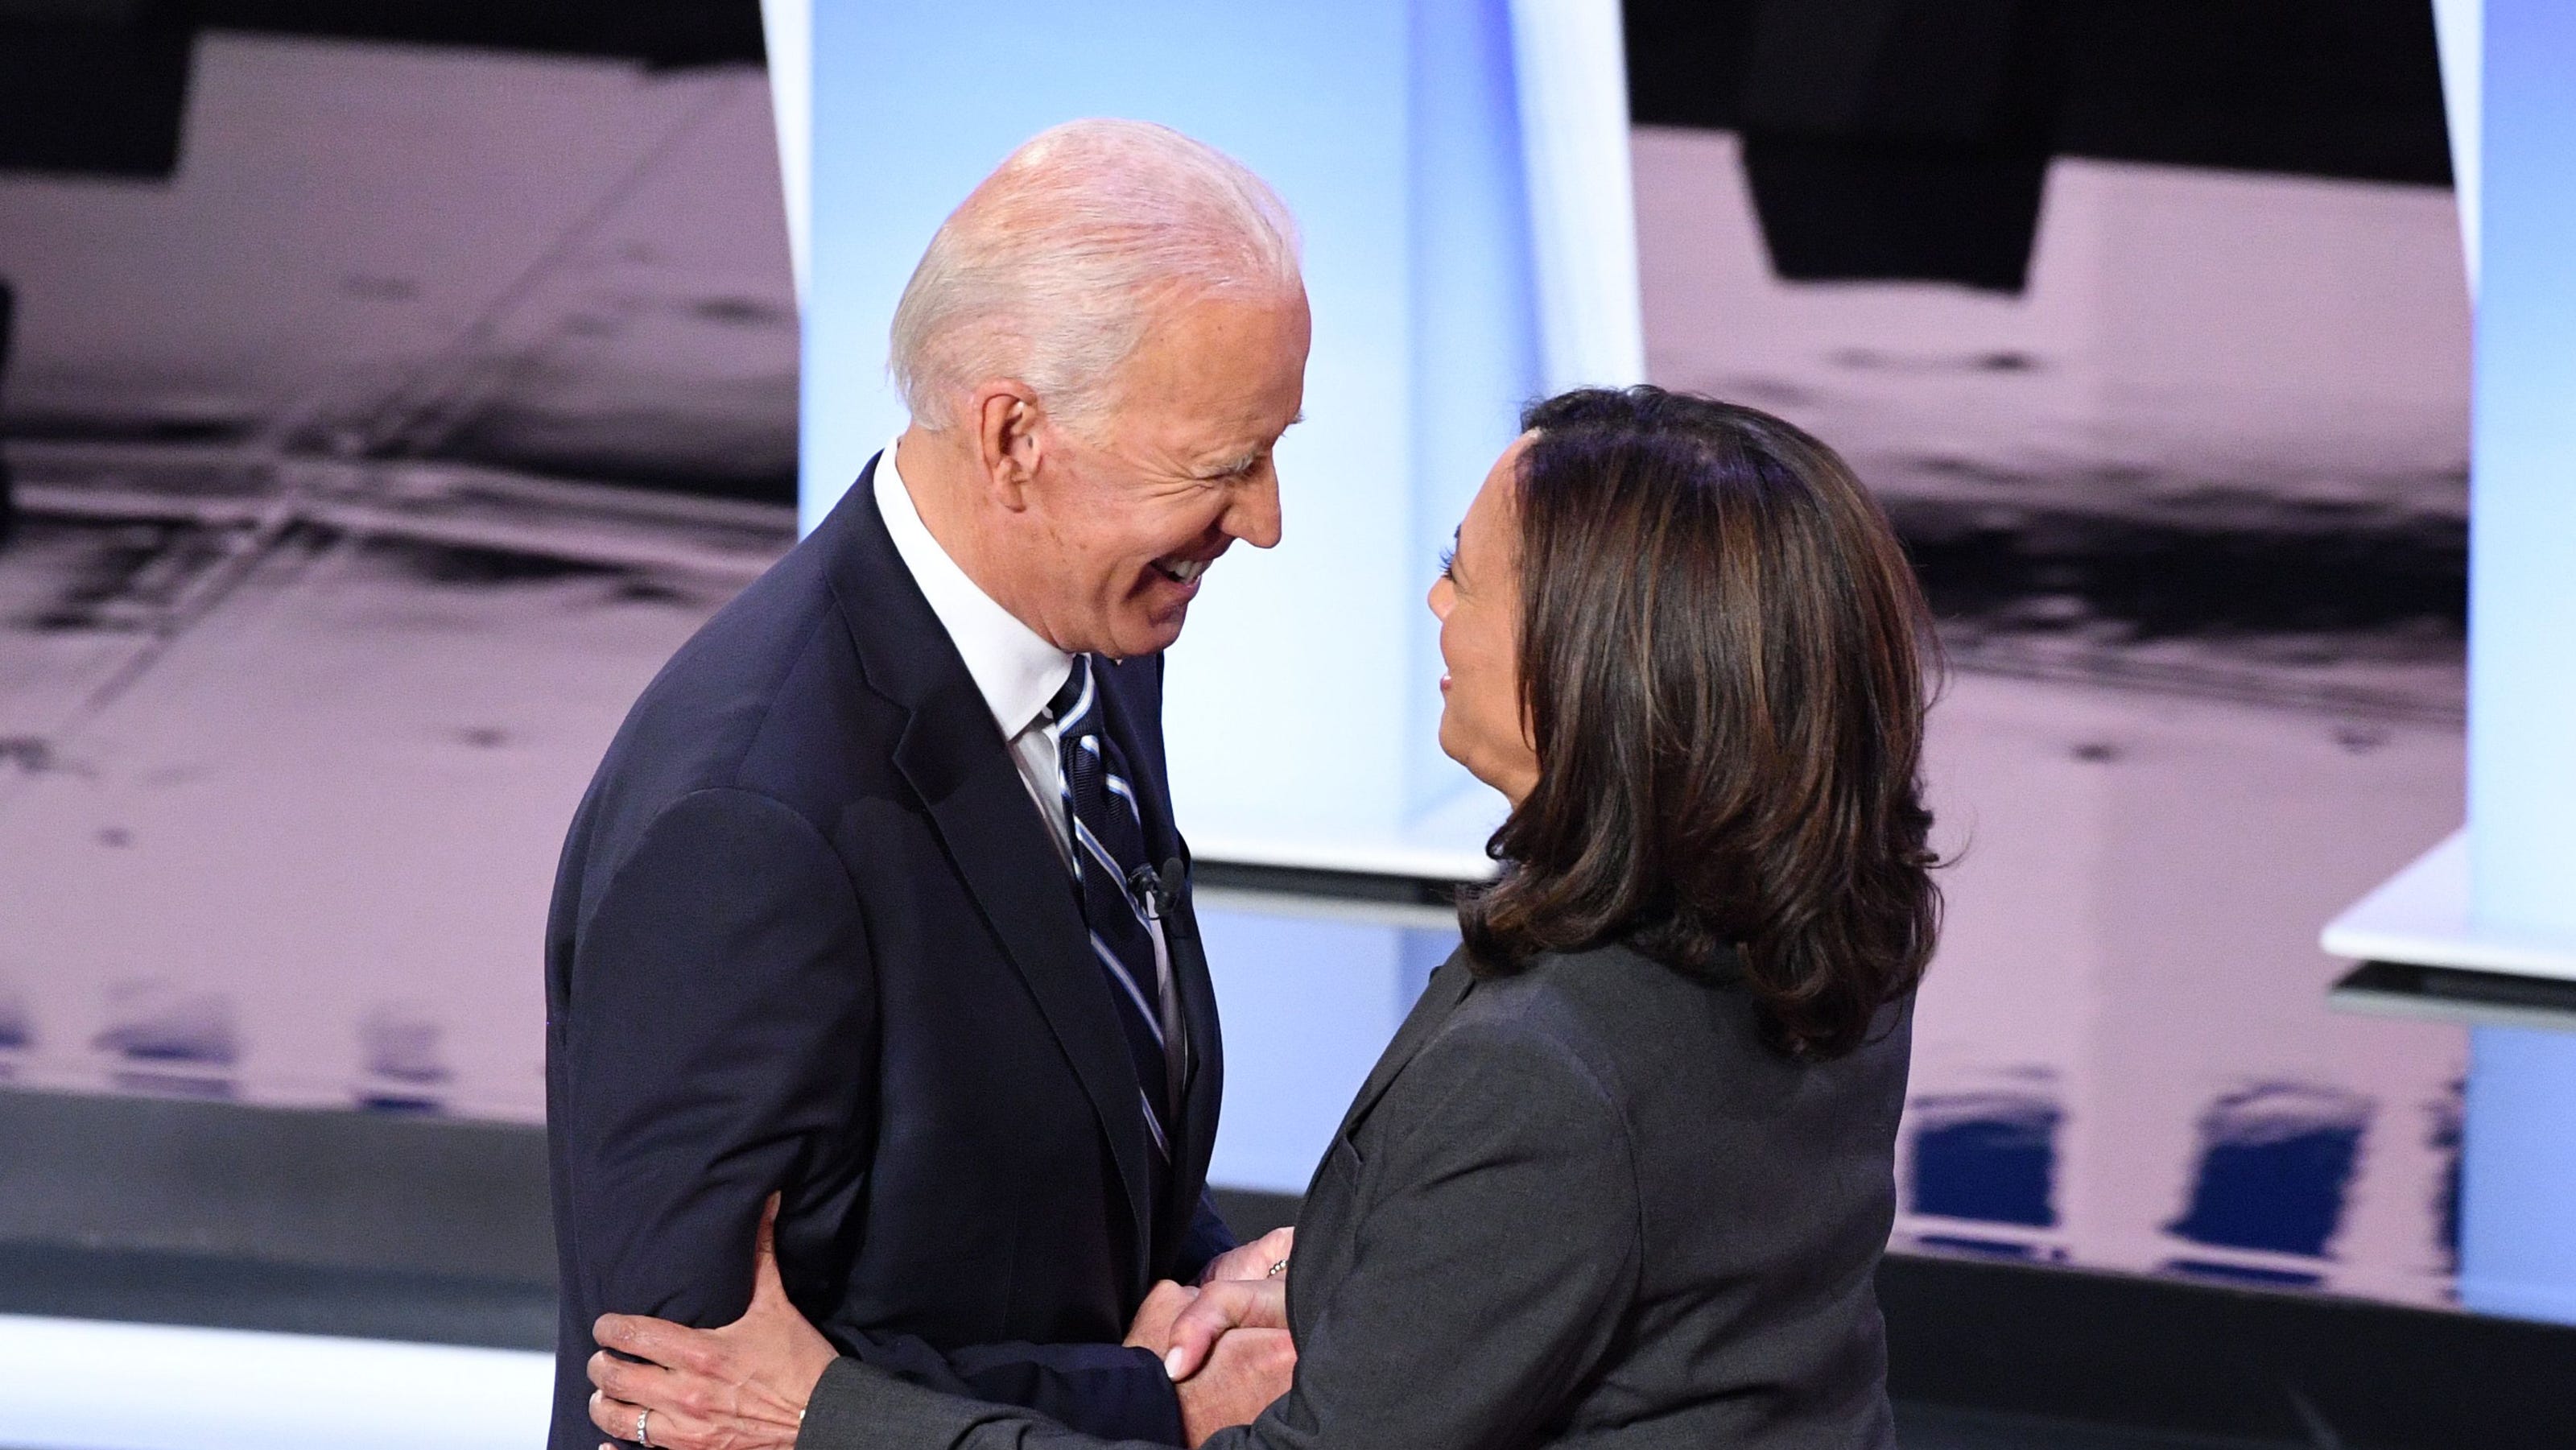 Joe Biden picks Kamala Harris as his vice presidential running mate